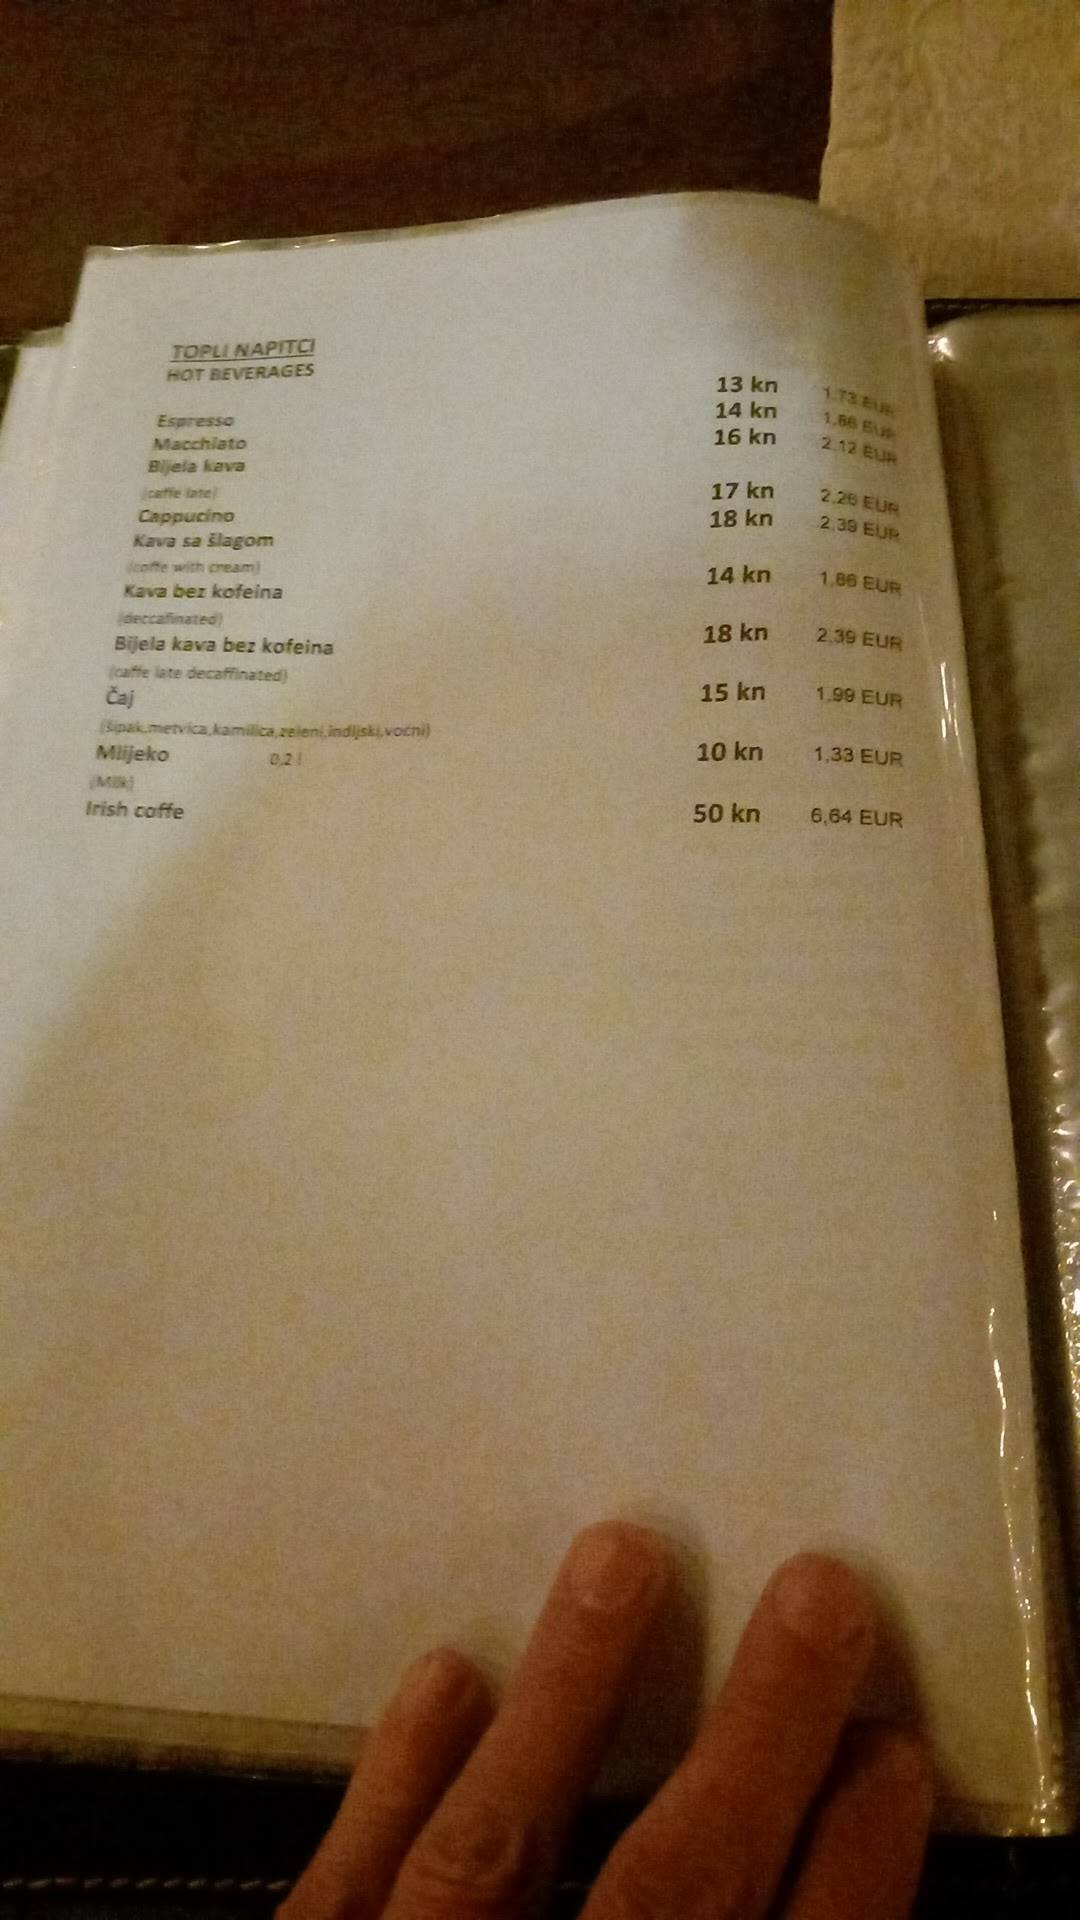 Lapad Restaurant menu